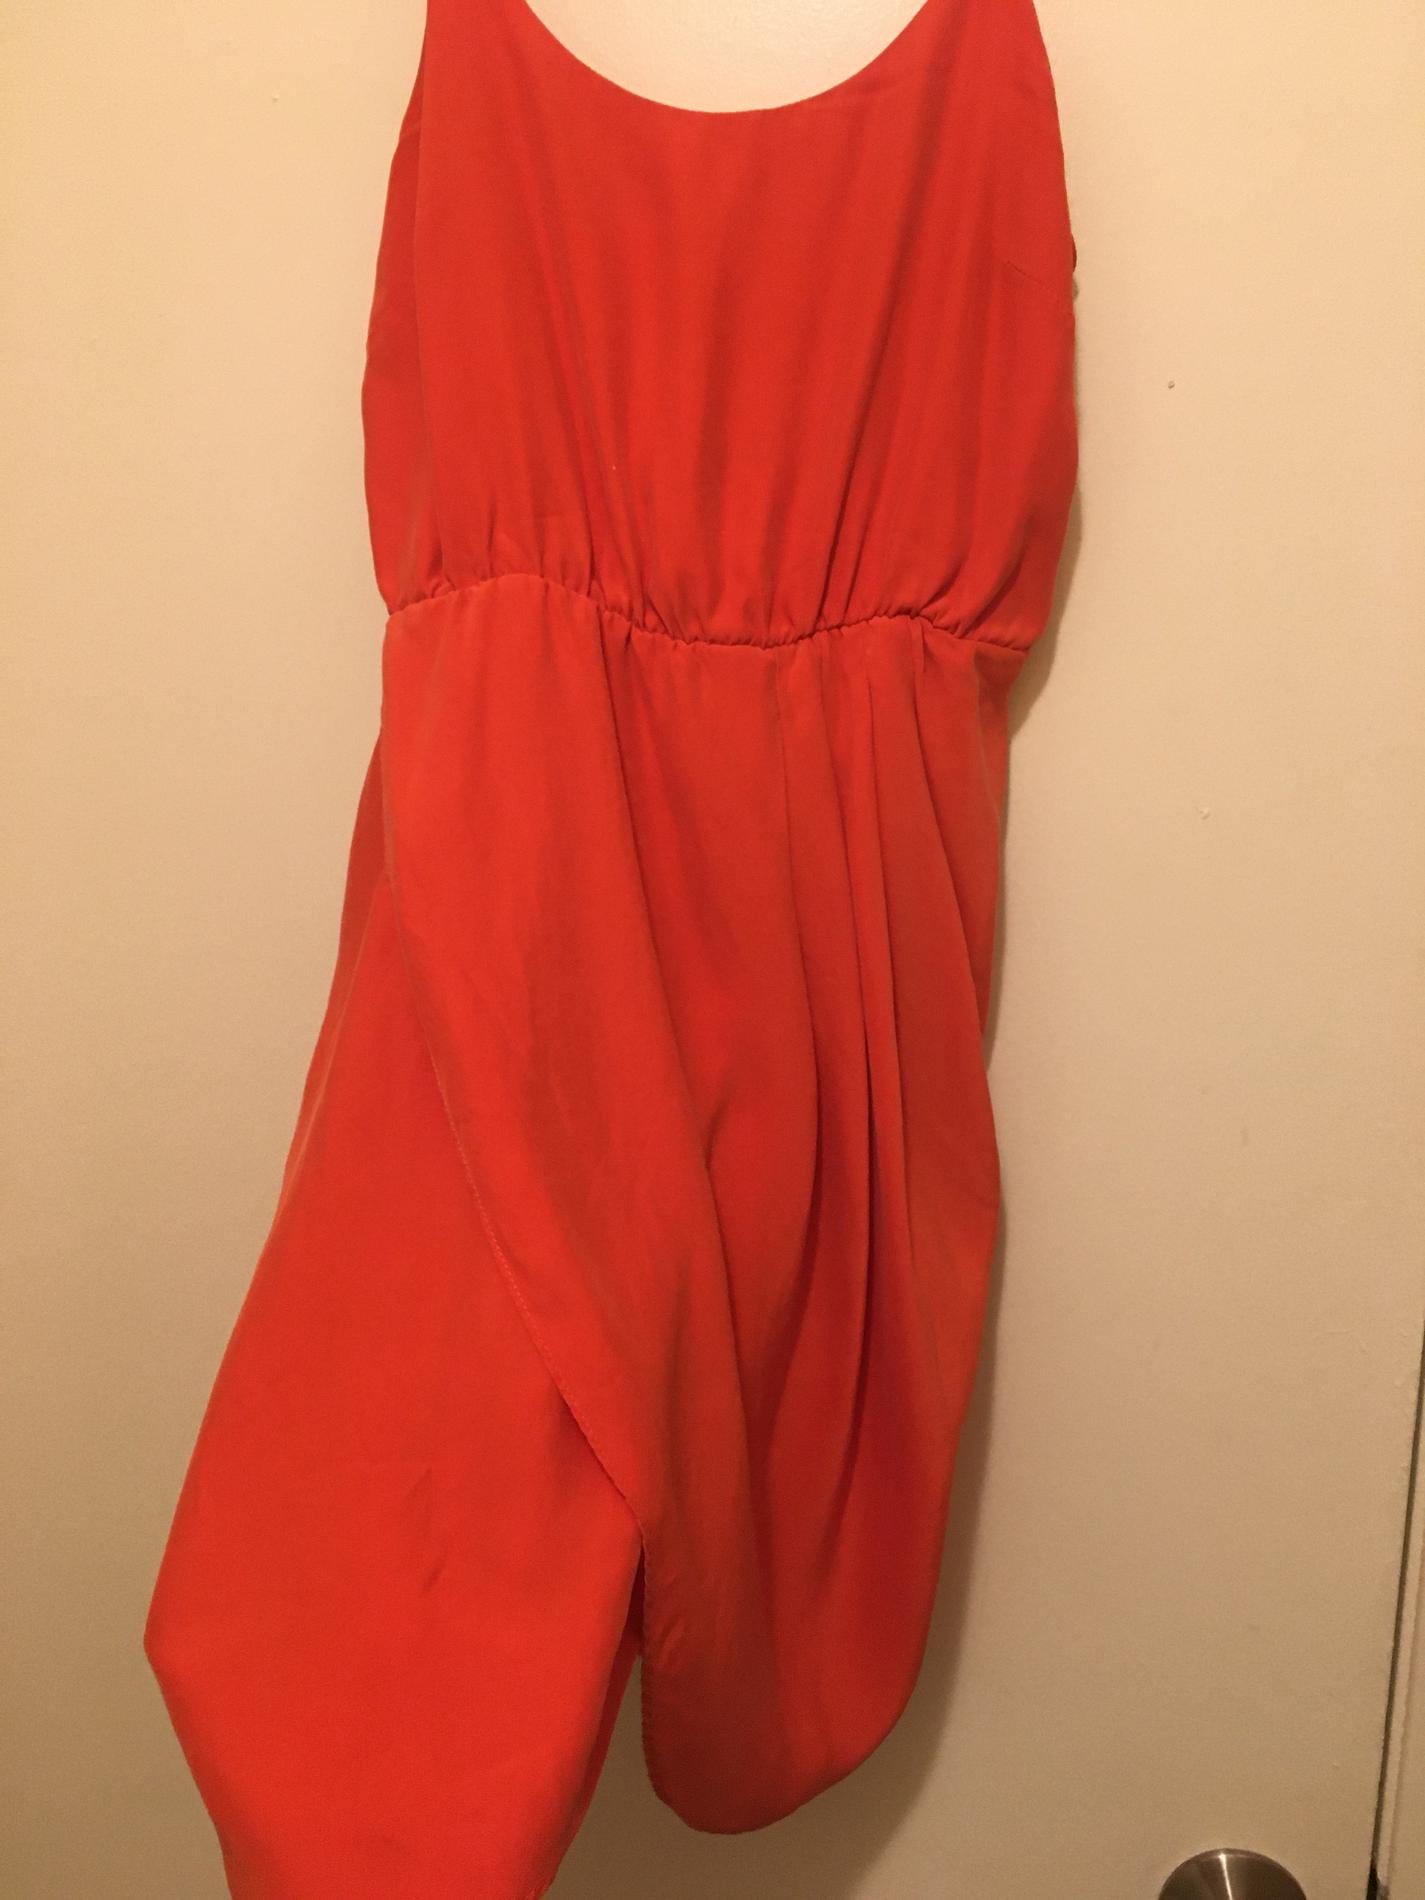 Amanda uprichard Size 6 Satin Orange Cocktail Dress on Queenly